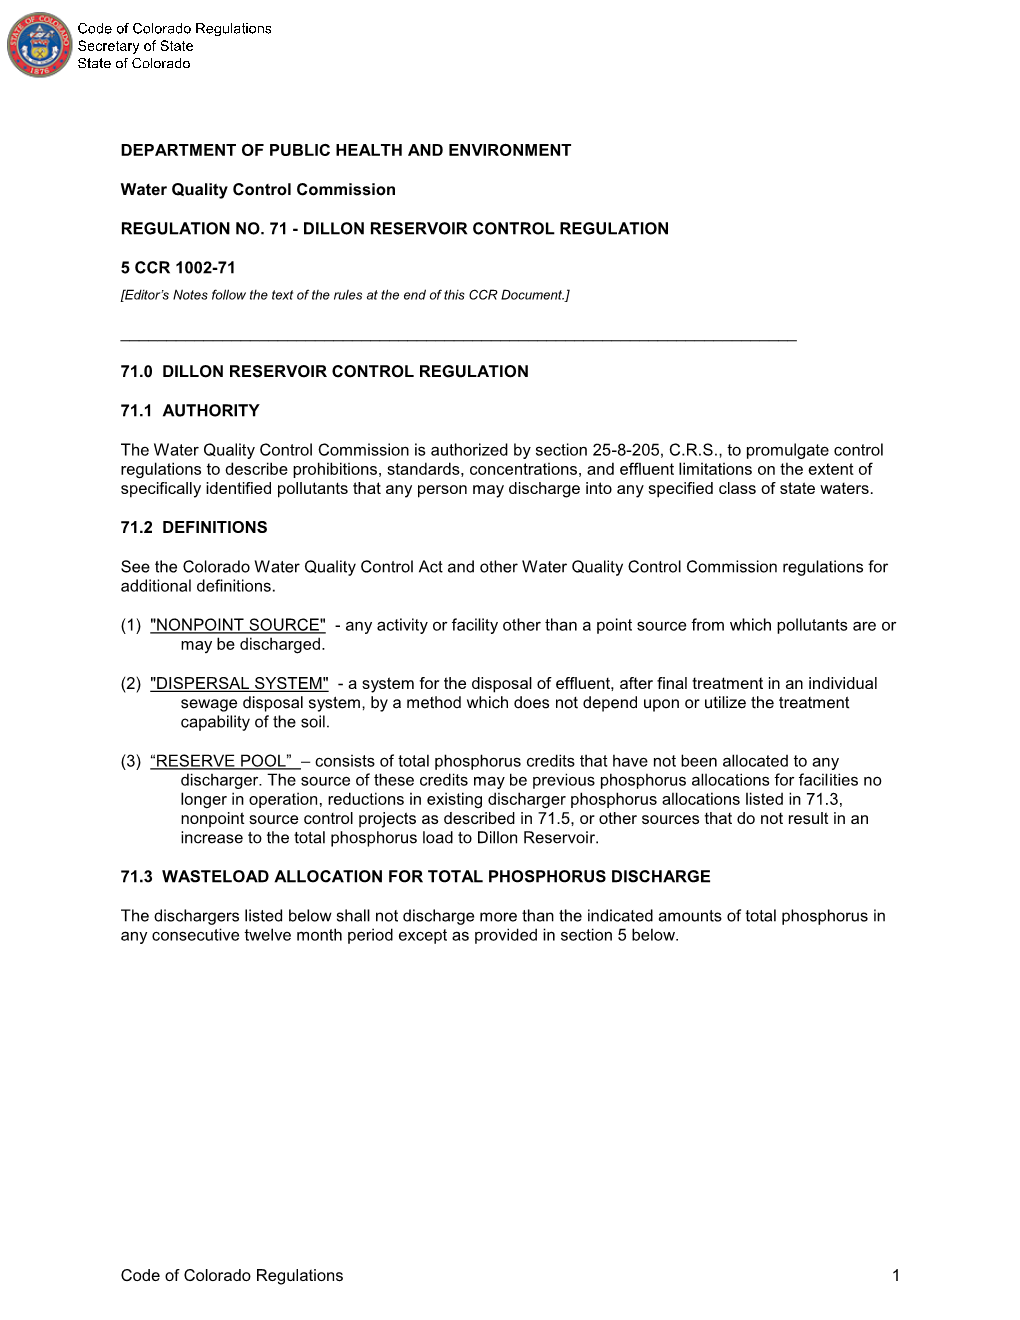 Code of Colorado Regulations 1 Discharge Allowed Phosphorus Discharge (Lb./Yr.) Major Municipal